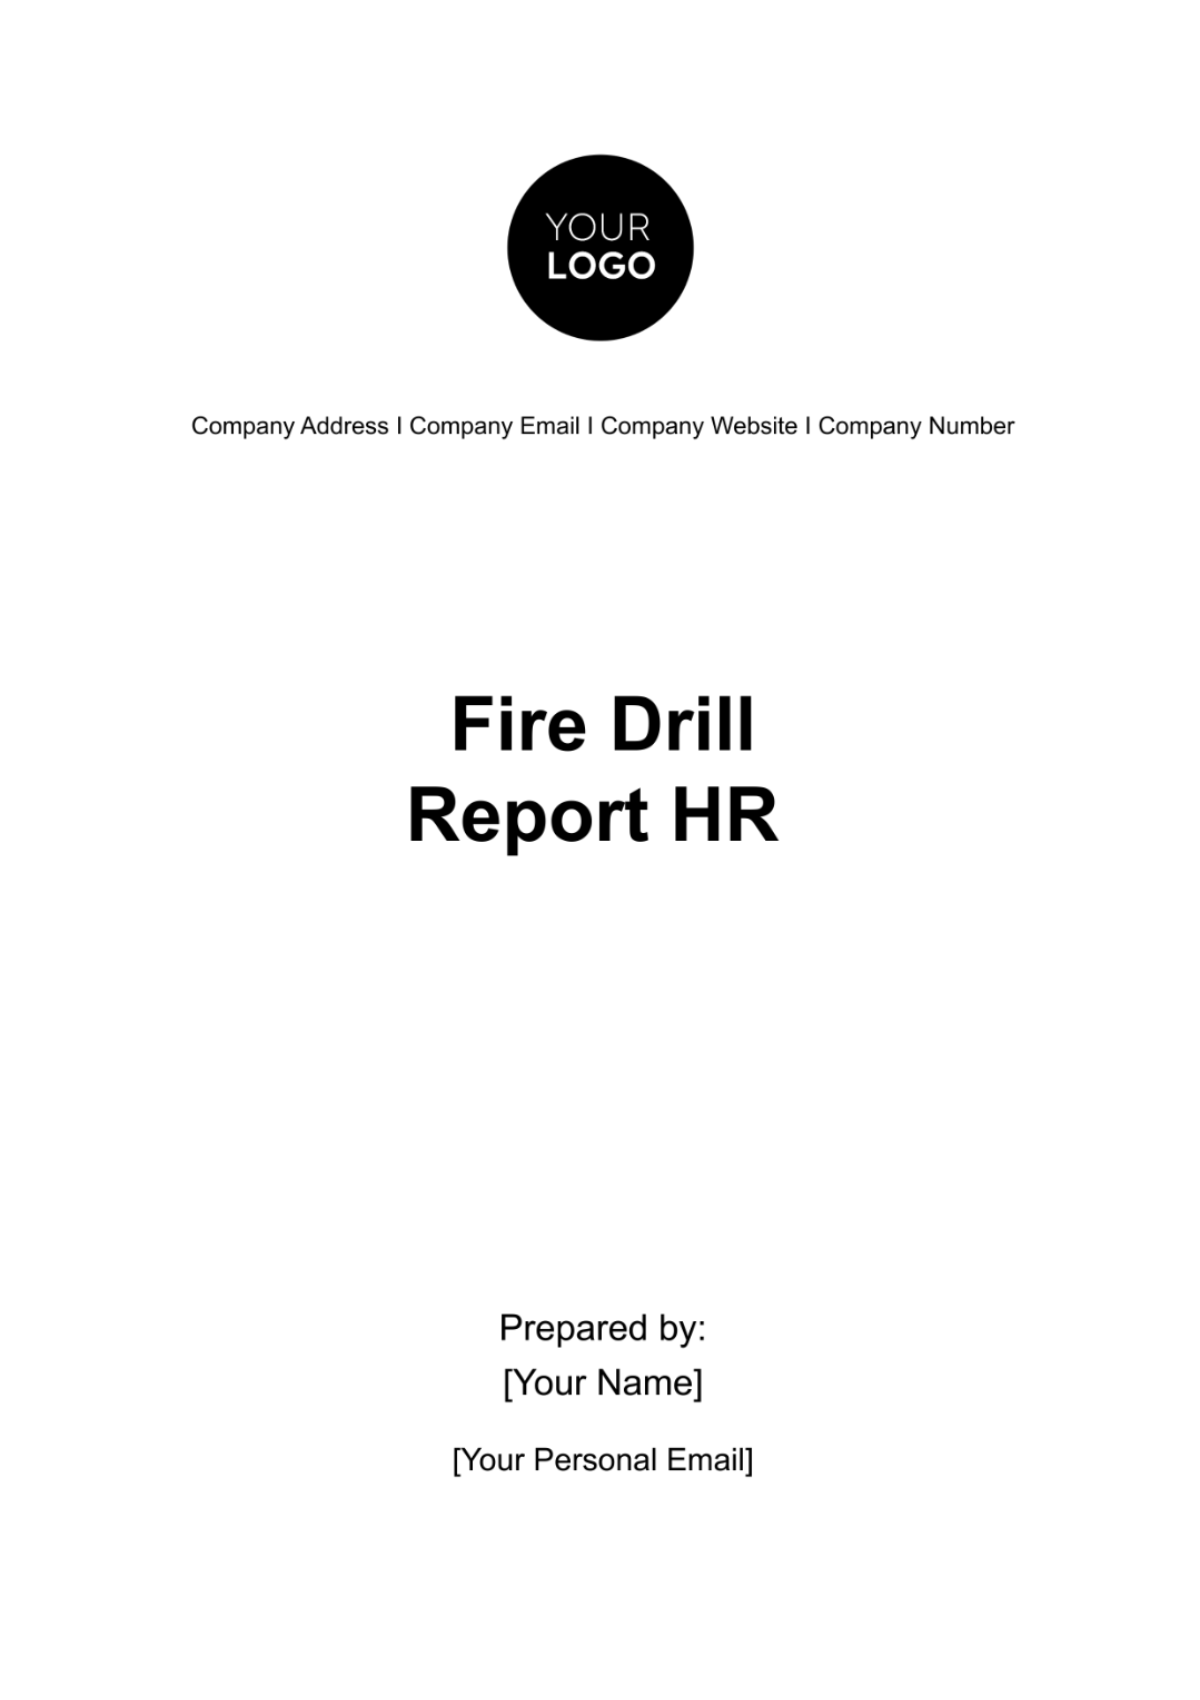 Fire Drill Report HR Template